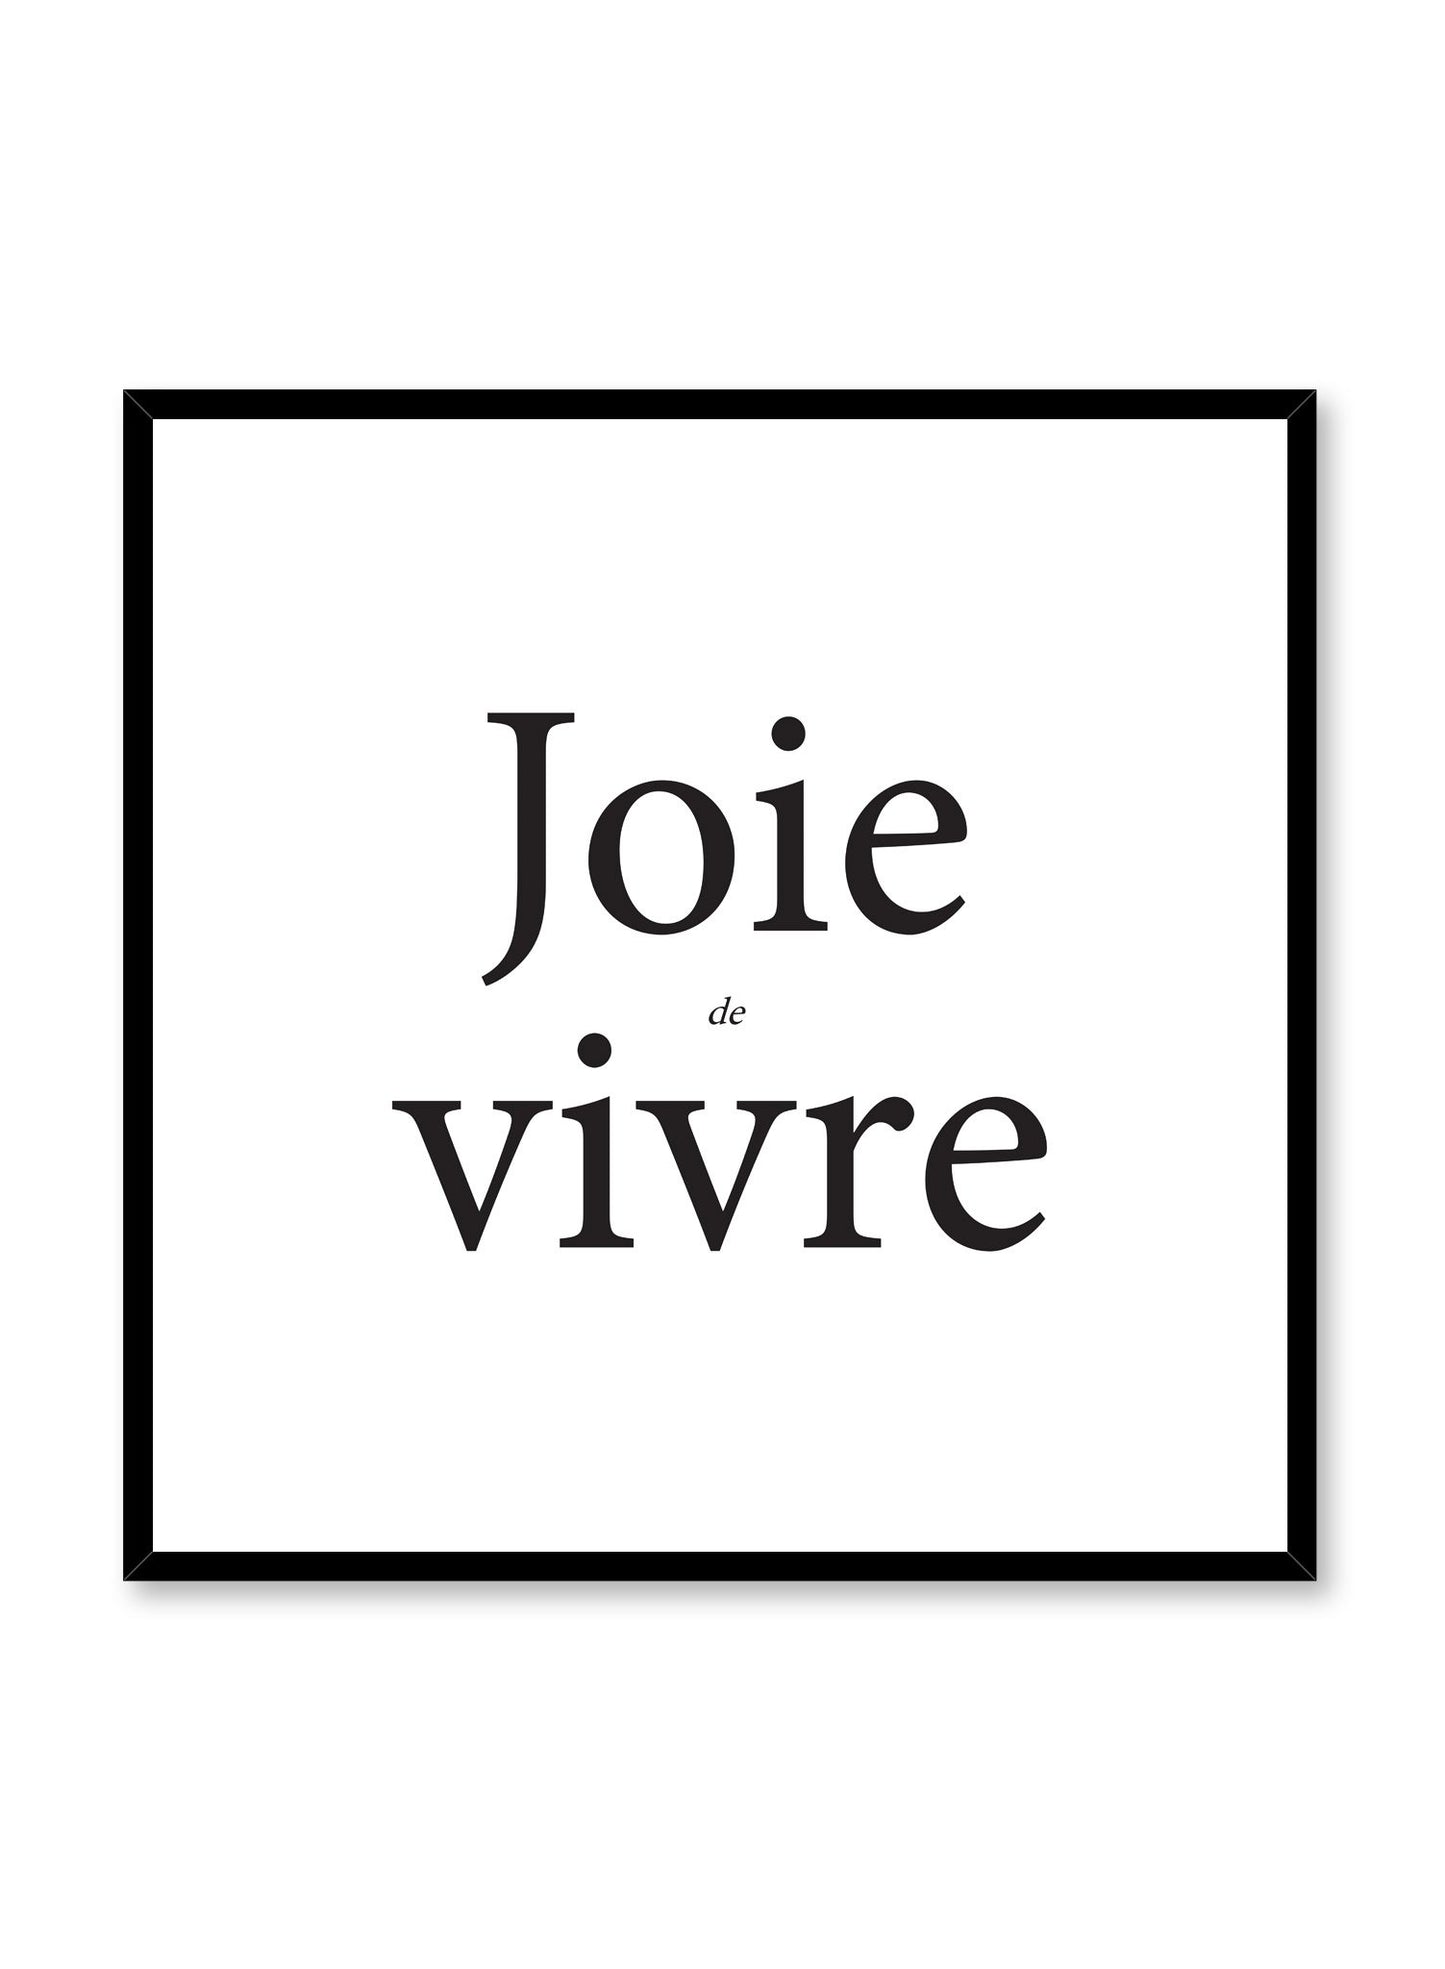 Joie de vivre modern minimalist typography art print by Opposite Wall